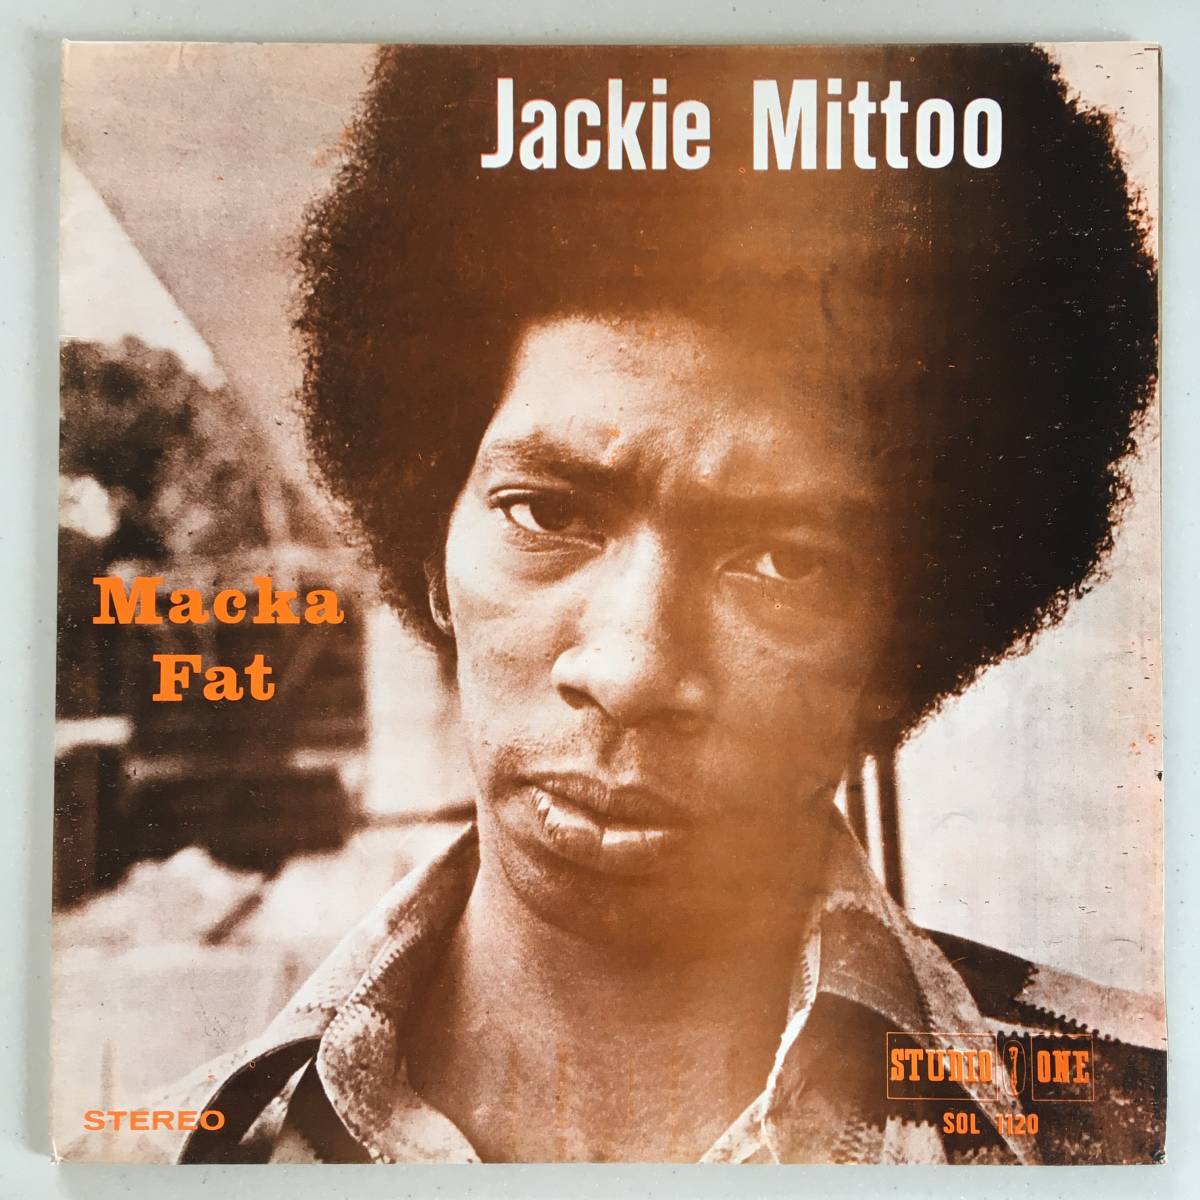 Jackie Mittoo / Macka Fat　[Coxsone Records - SOL 1120, Studio One - SOL 1120]